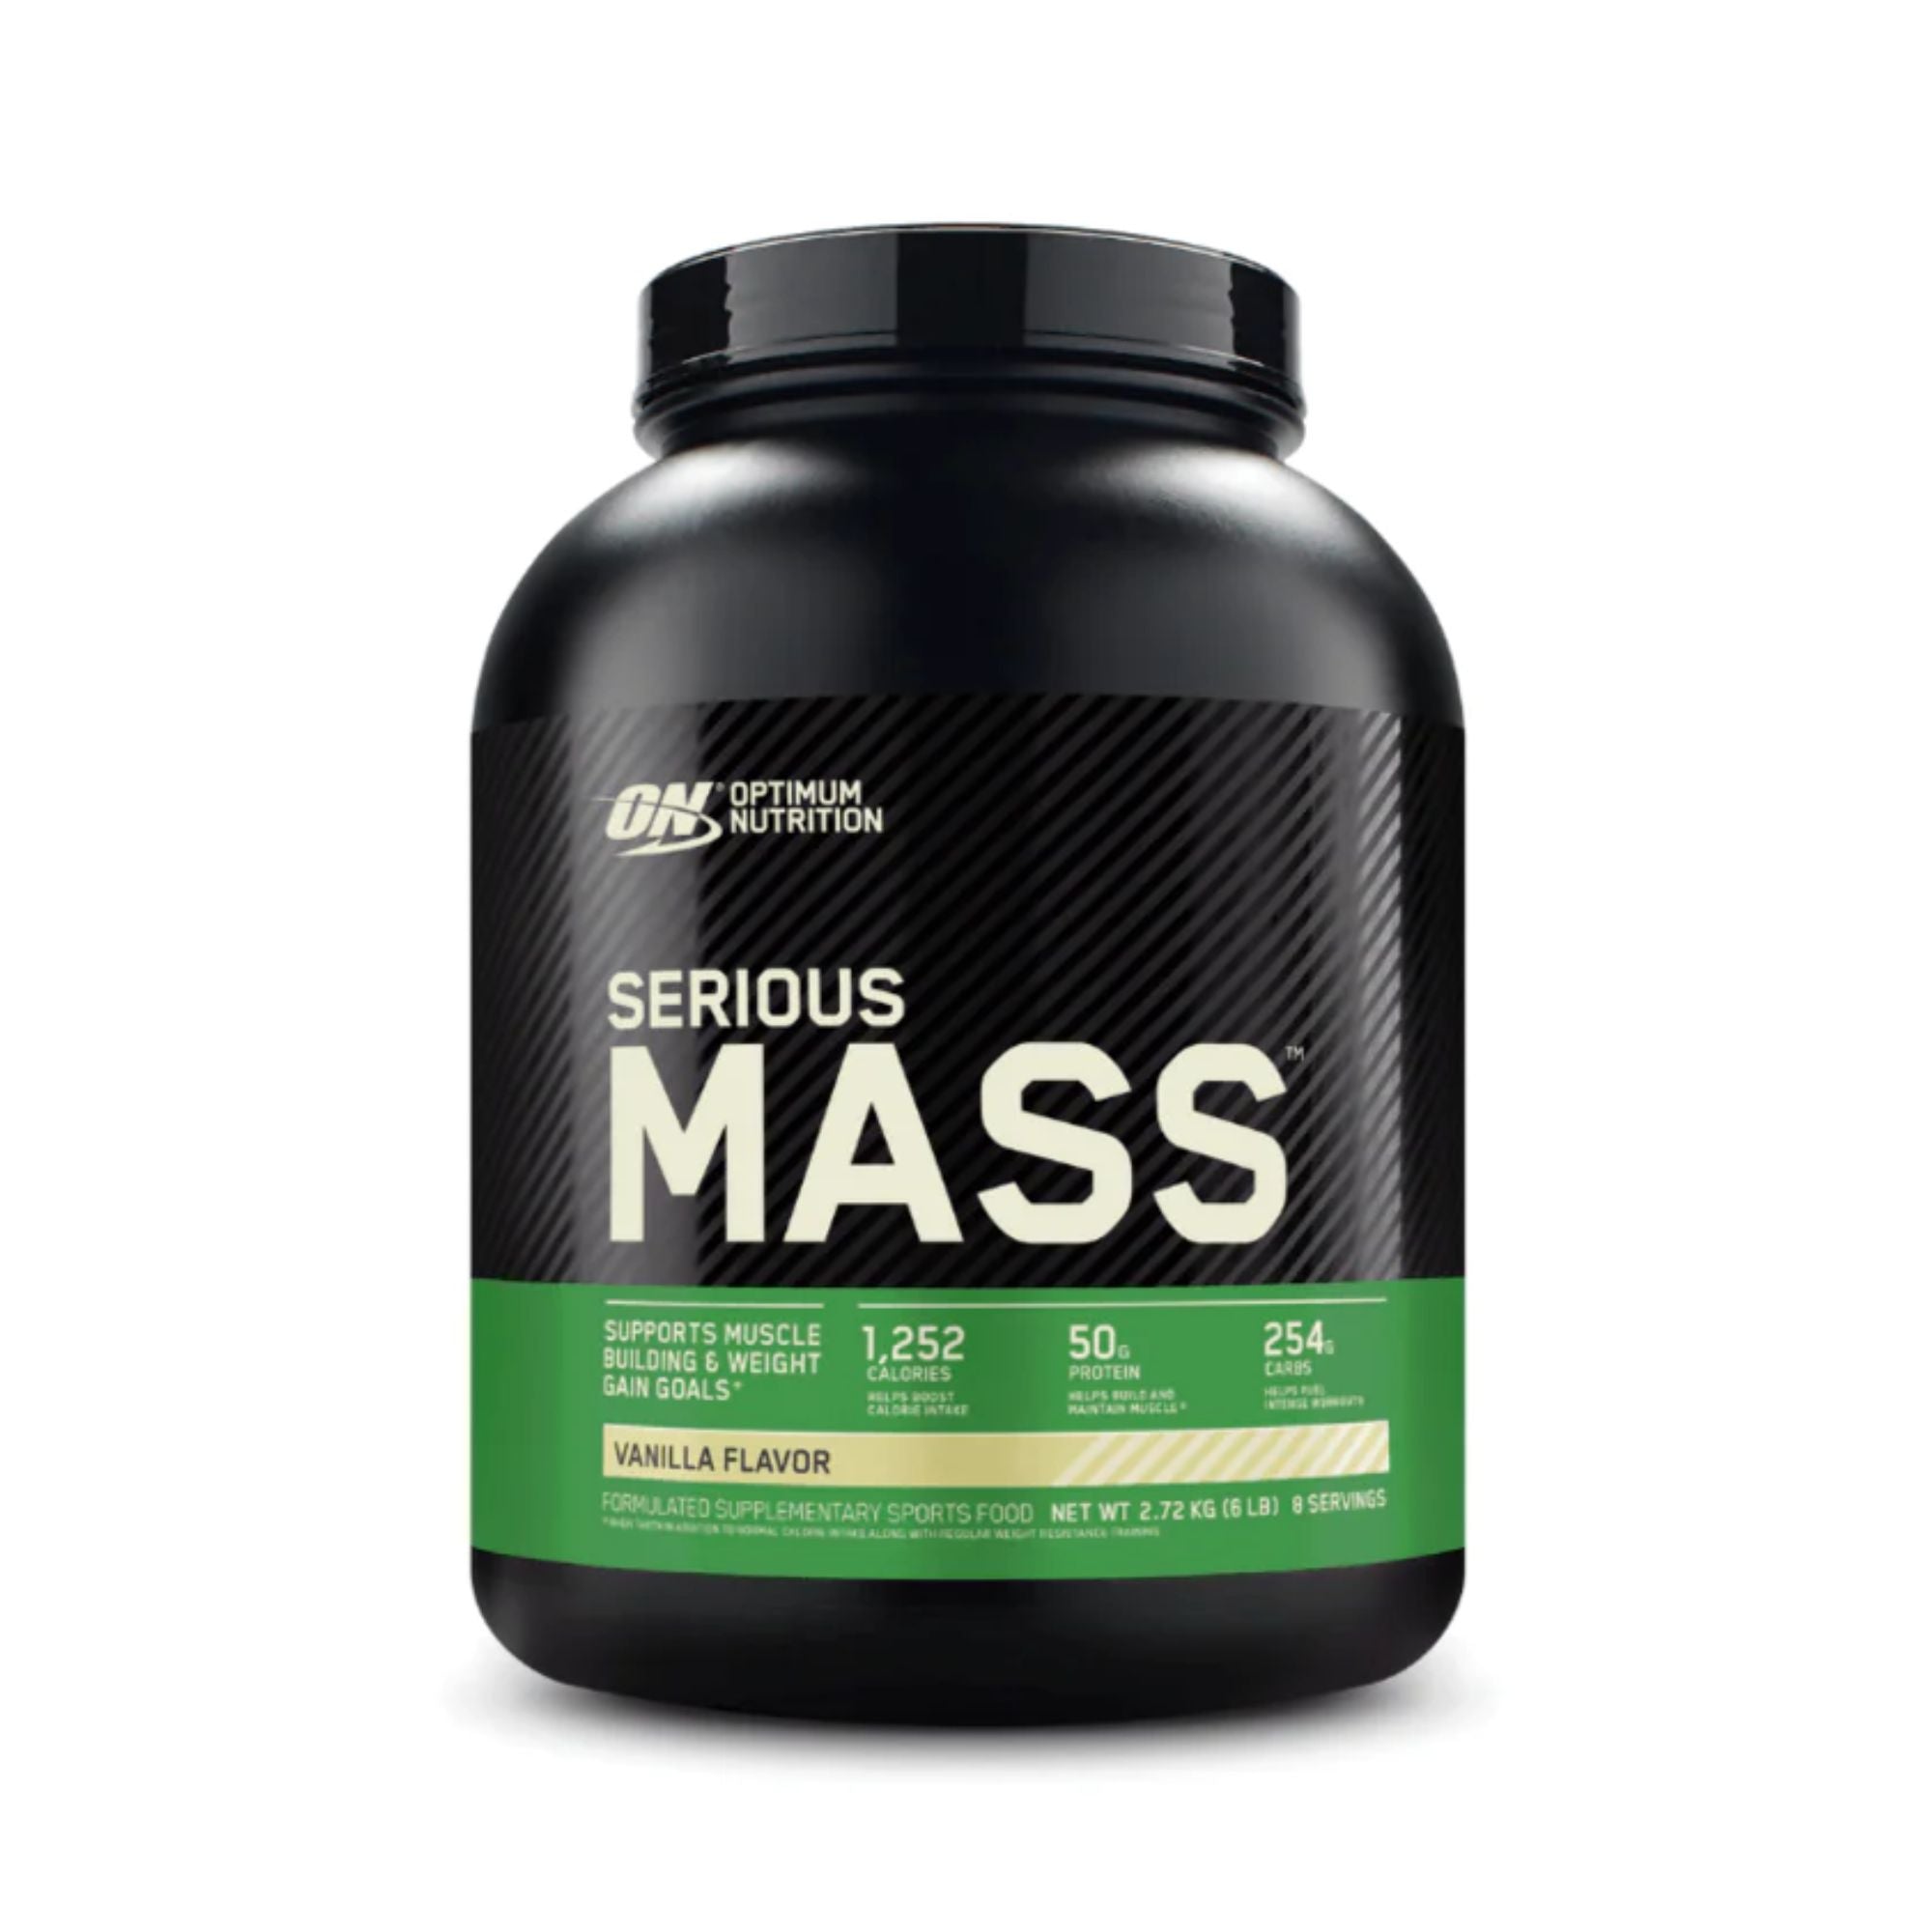 Optimum Nutrition Serious Mass Protein Powder Mass Gainer